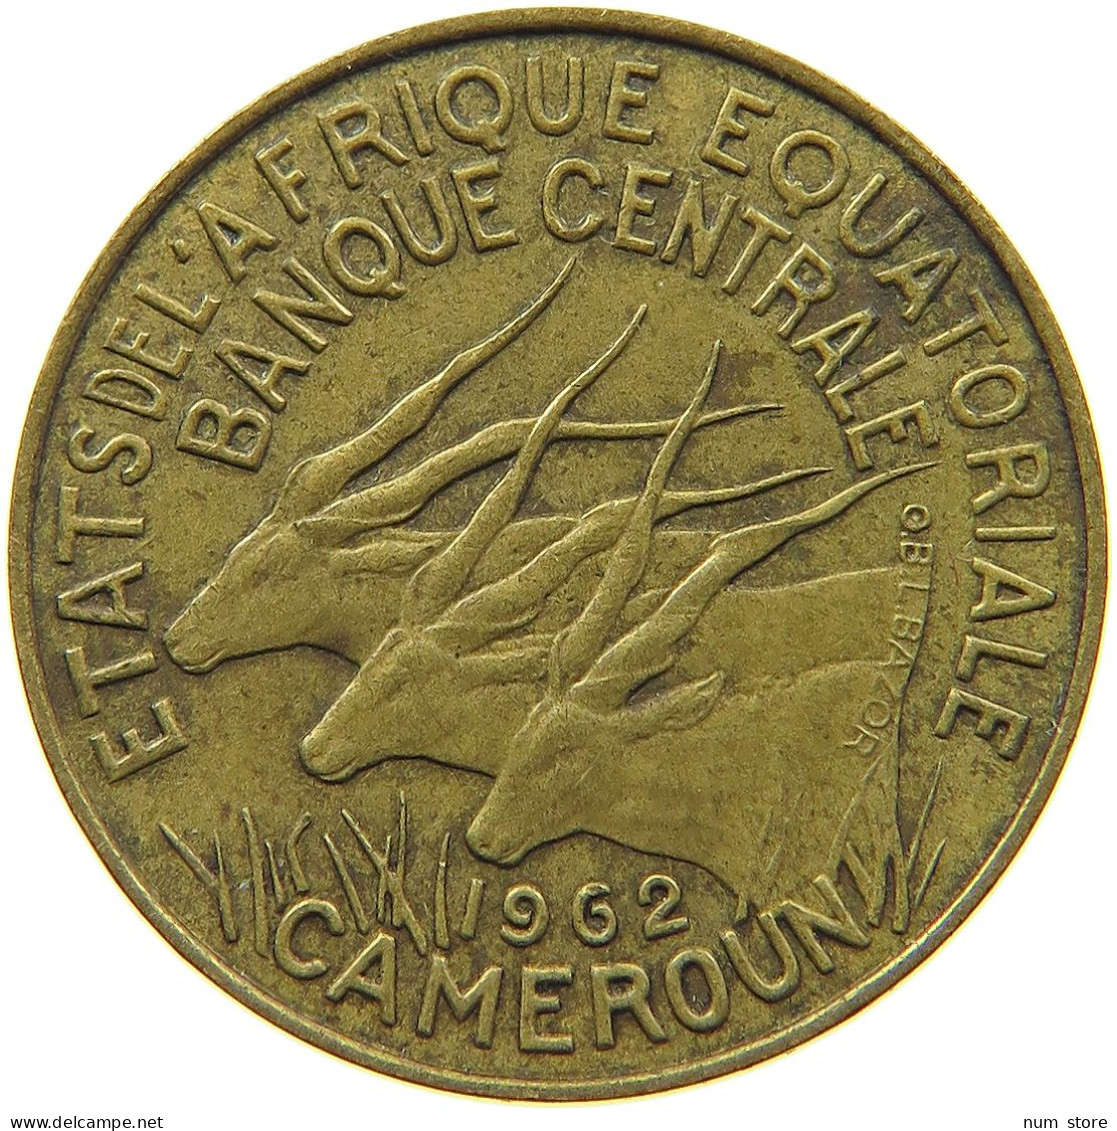 CAMEROON 5 FRANCS 1962  #MA 099253 - Cameroon